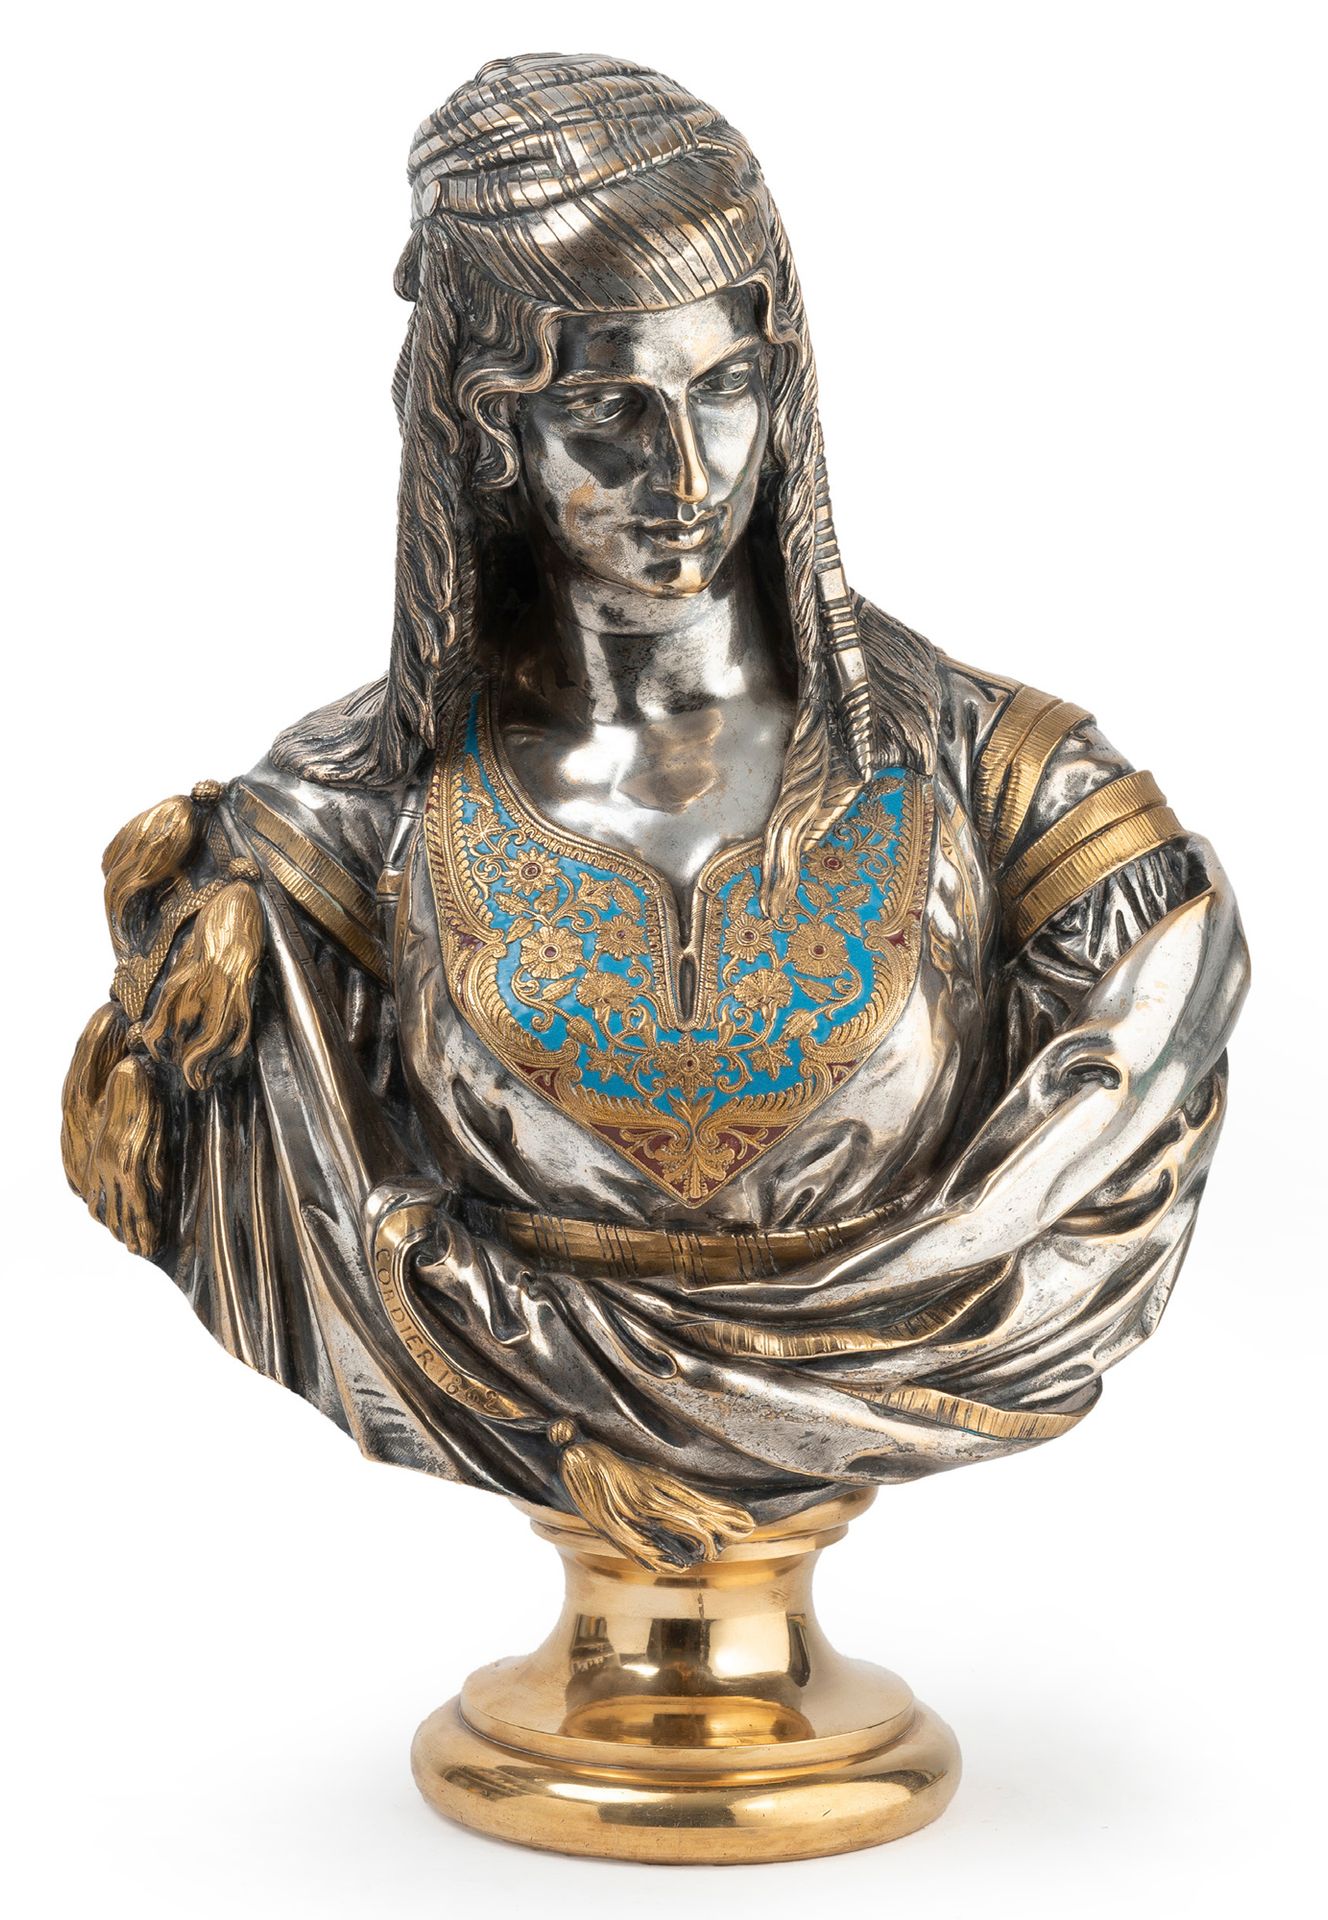 Charles CORDIER (1827-1905) La Juive d'Alger, 1862.
Silvered, gilded and enamele&hellip;